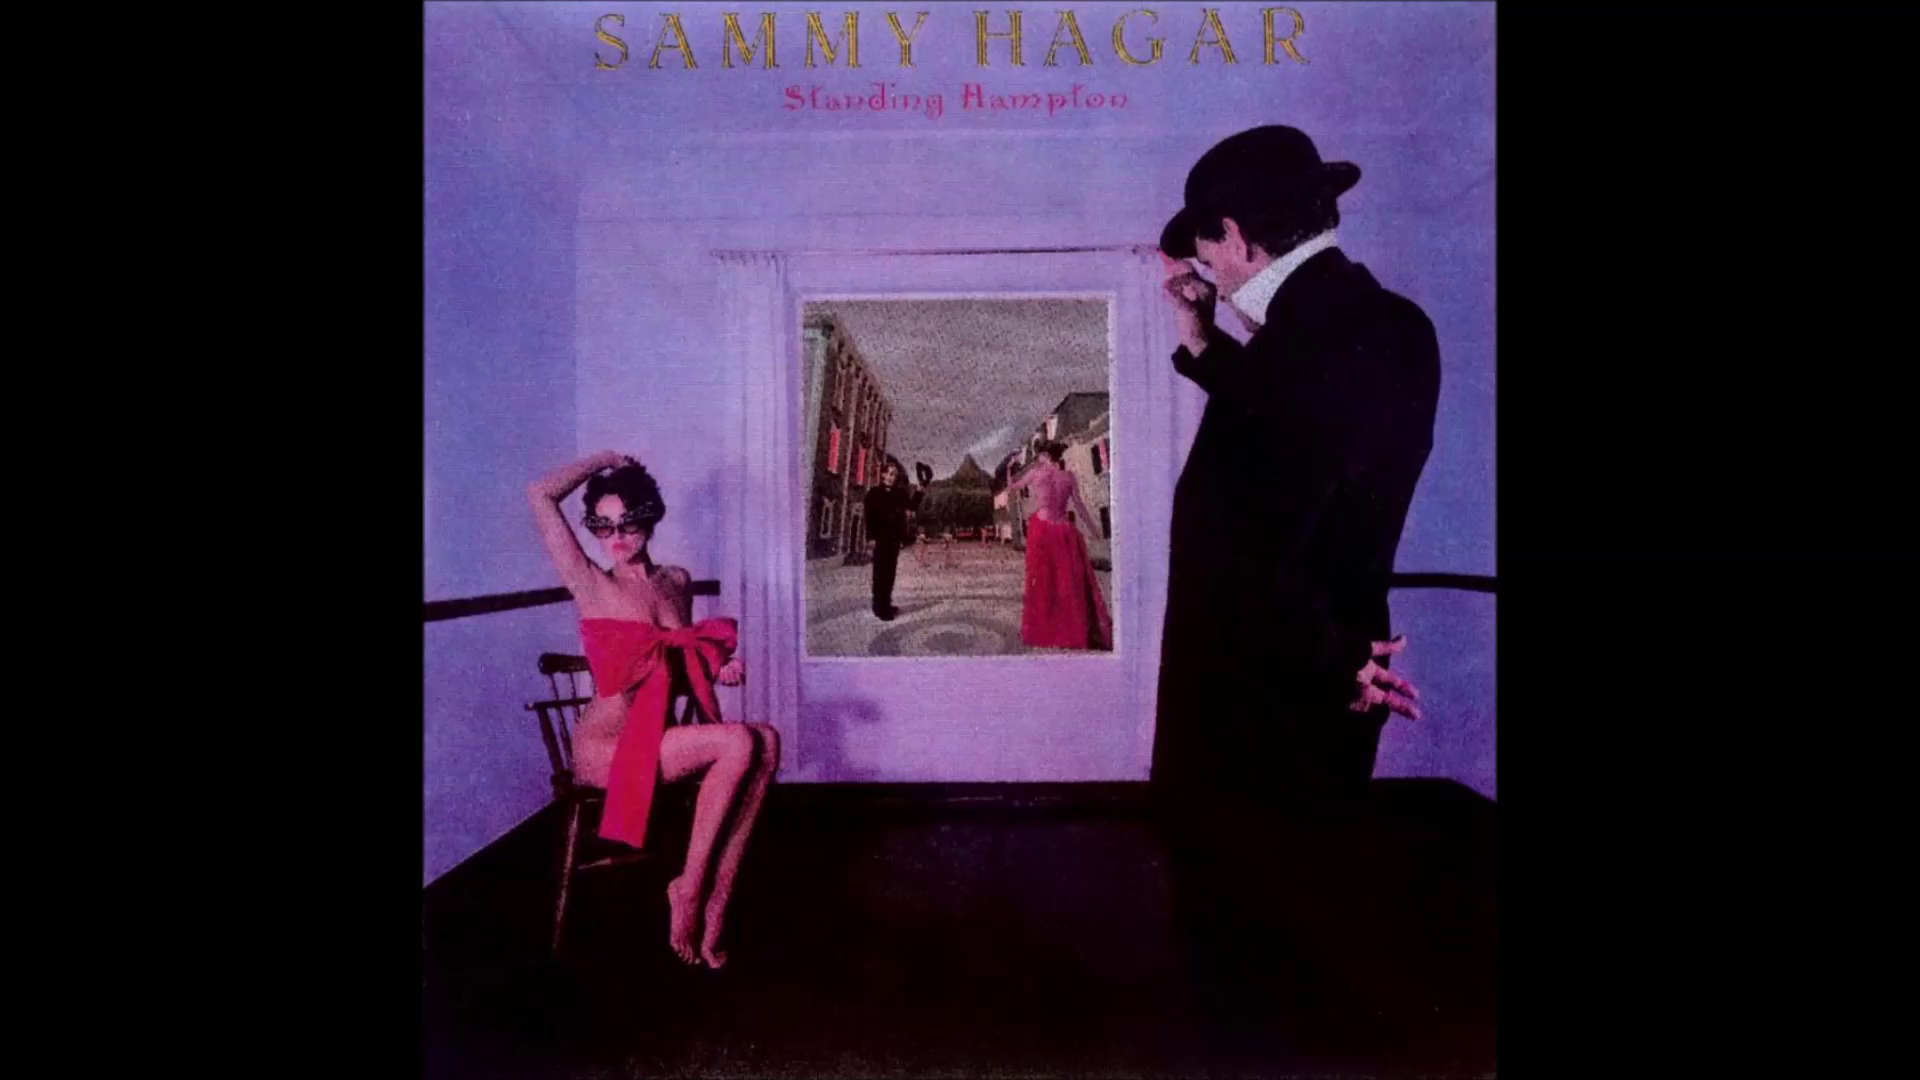 Sammy Hagar - Standing Hampton Full album